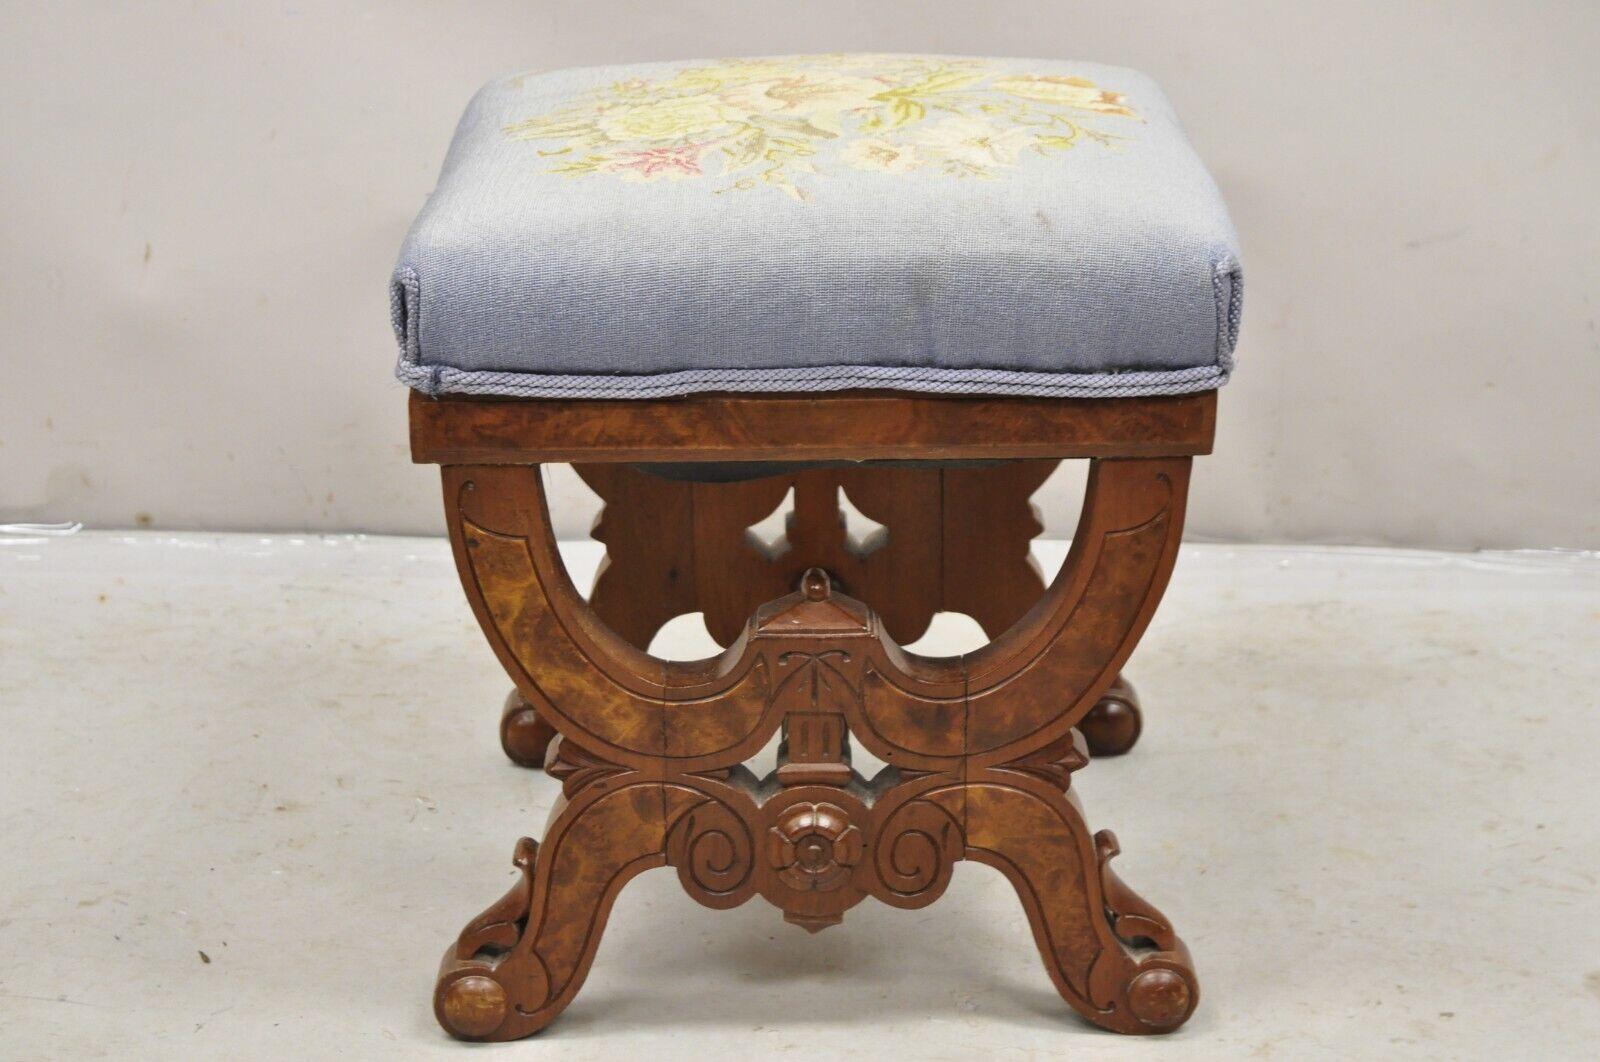 Antique Eastlake Victorian Burl Walnut Carved Curule Footstool Ottoman. Circa 19th Century. Measurements: 16